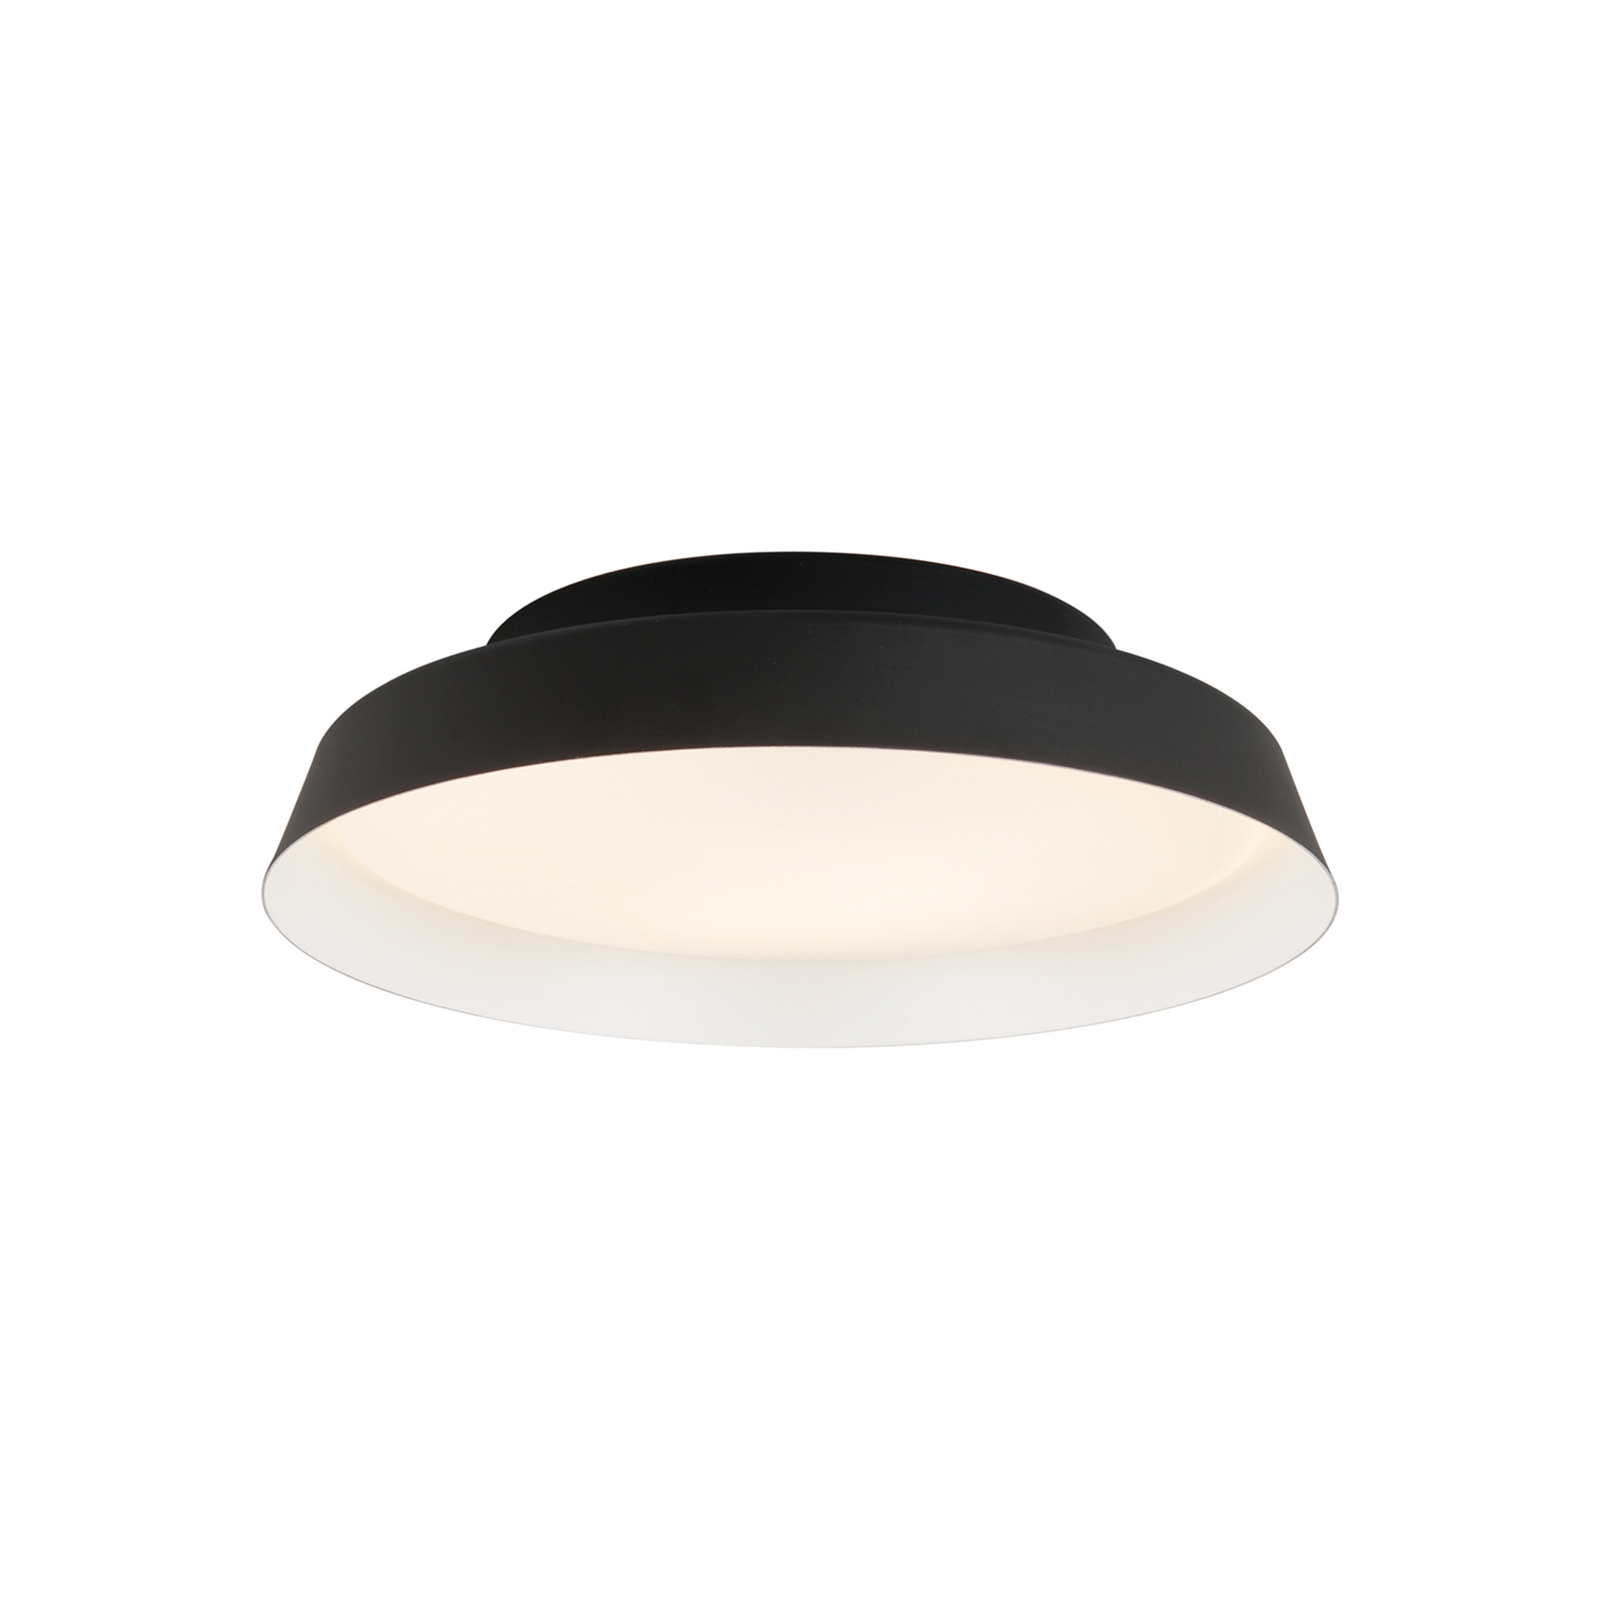 LED plafondlamp Boop! Ø54cm zwart/wit